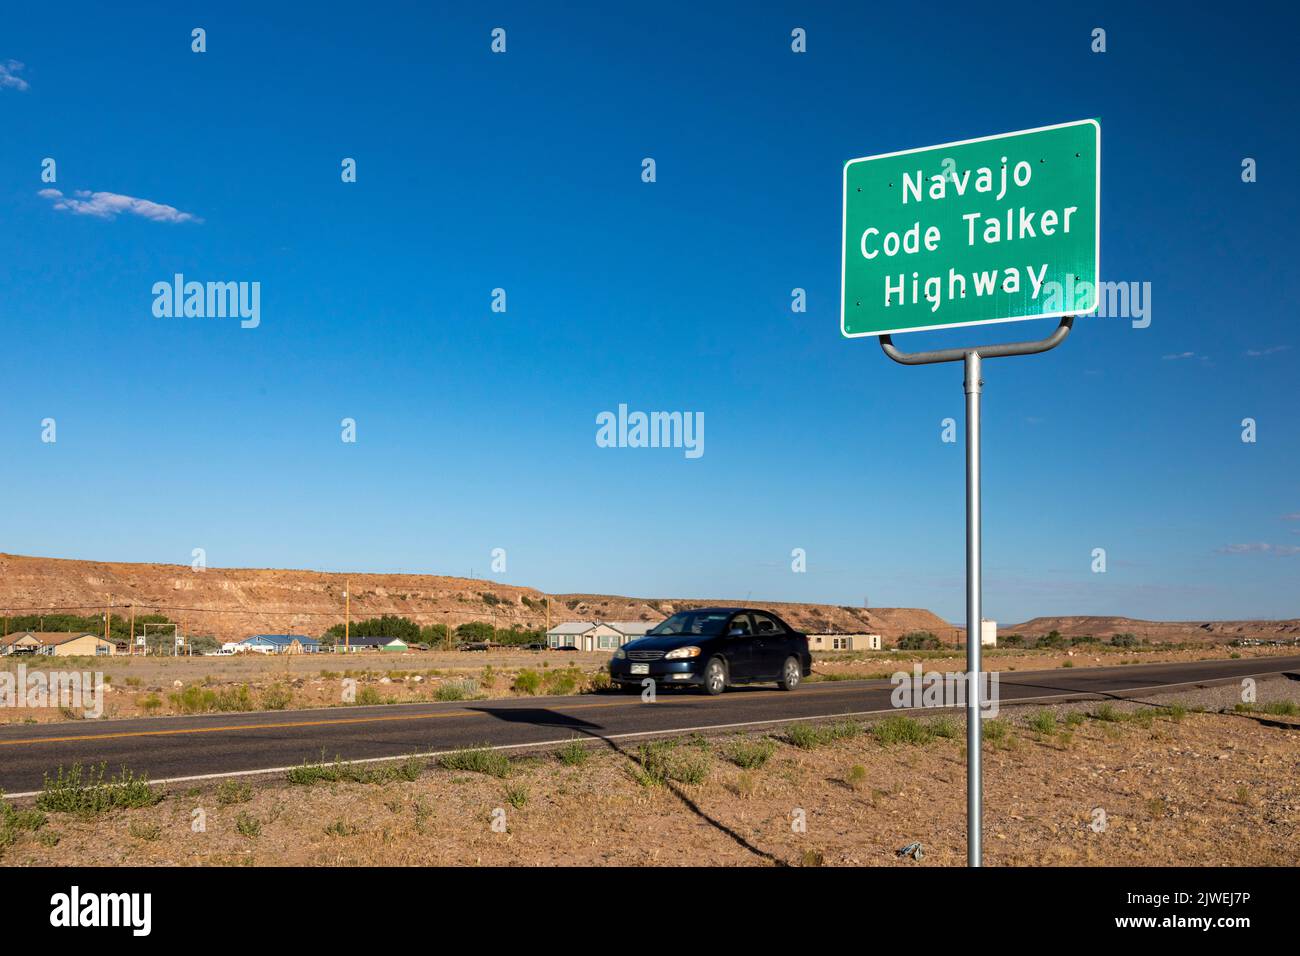 Montezuma Creek, Utah - Utah State Highway 162, which passes through the Navajo Nation, is named the Navajo Code Talker Highway. Navajo code talkers s Stock Photo